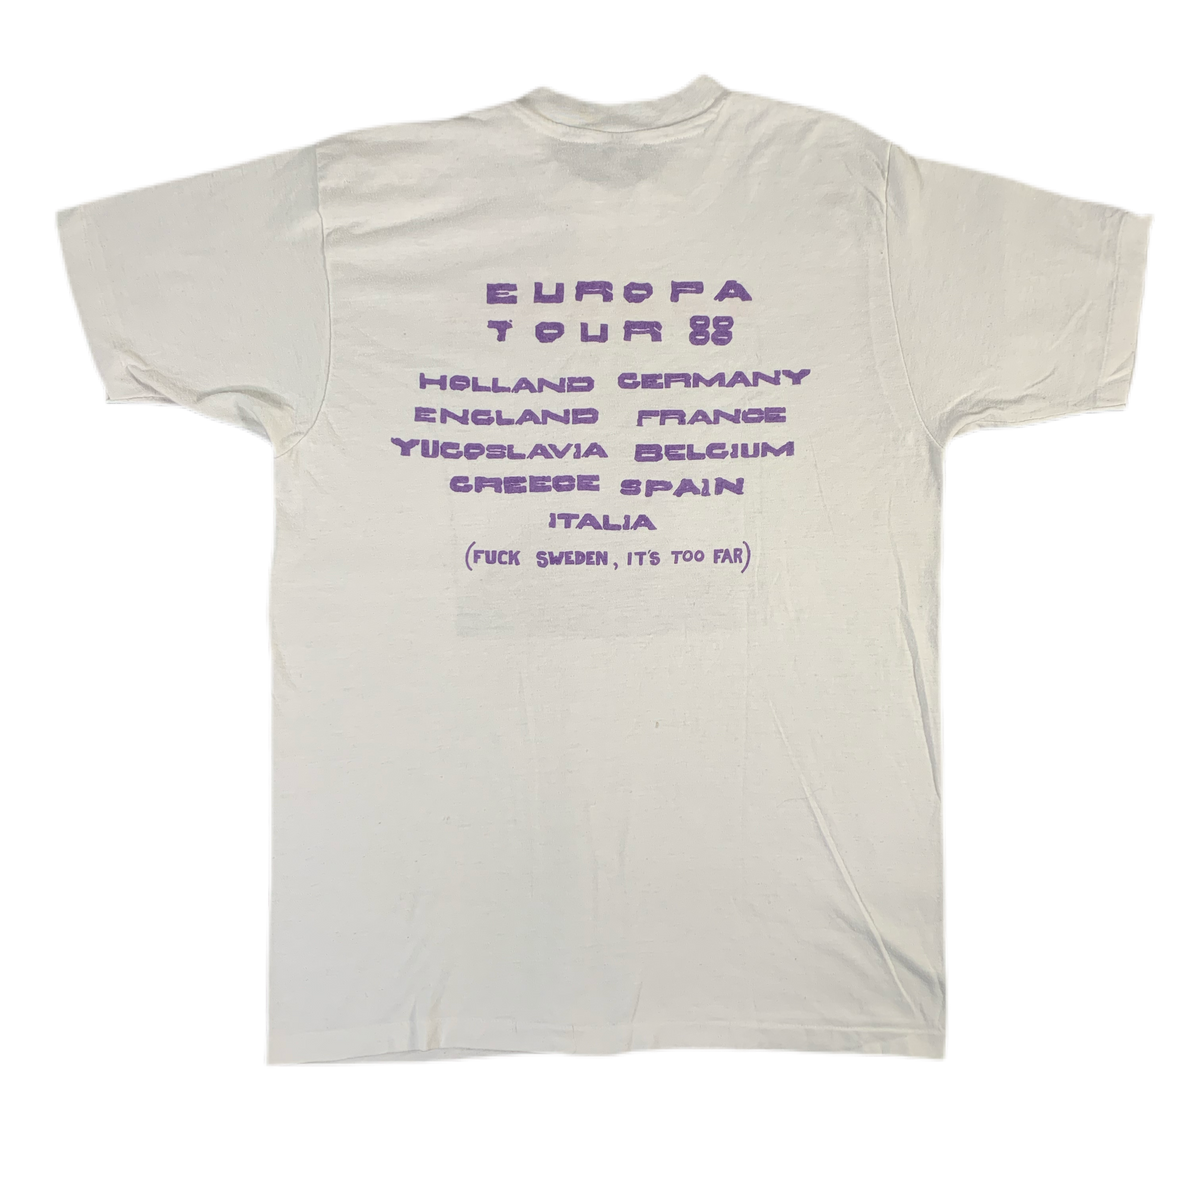 Vintage Scream “Europa” T-Shirt - jointcustodydc